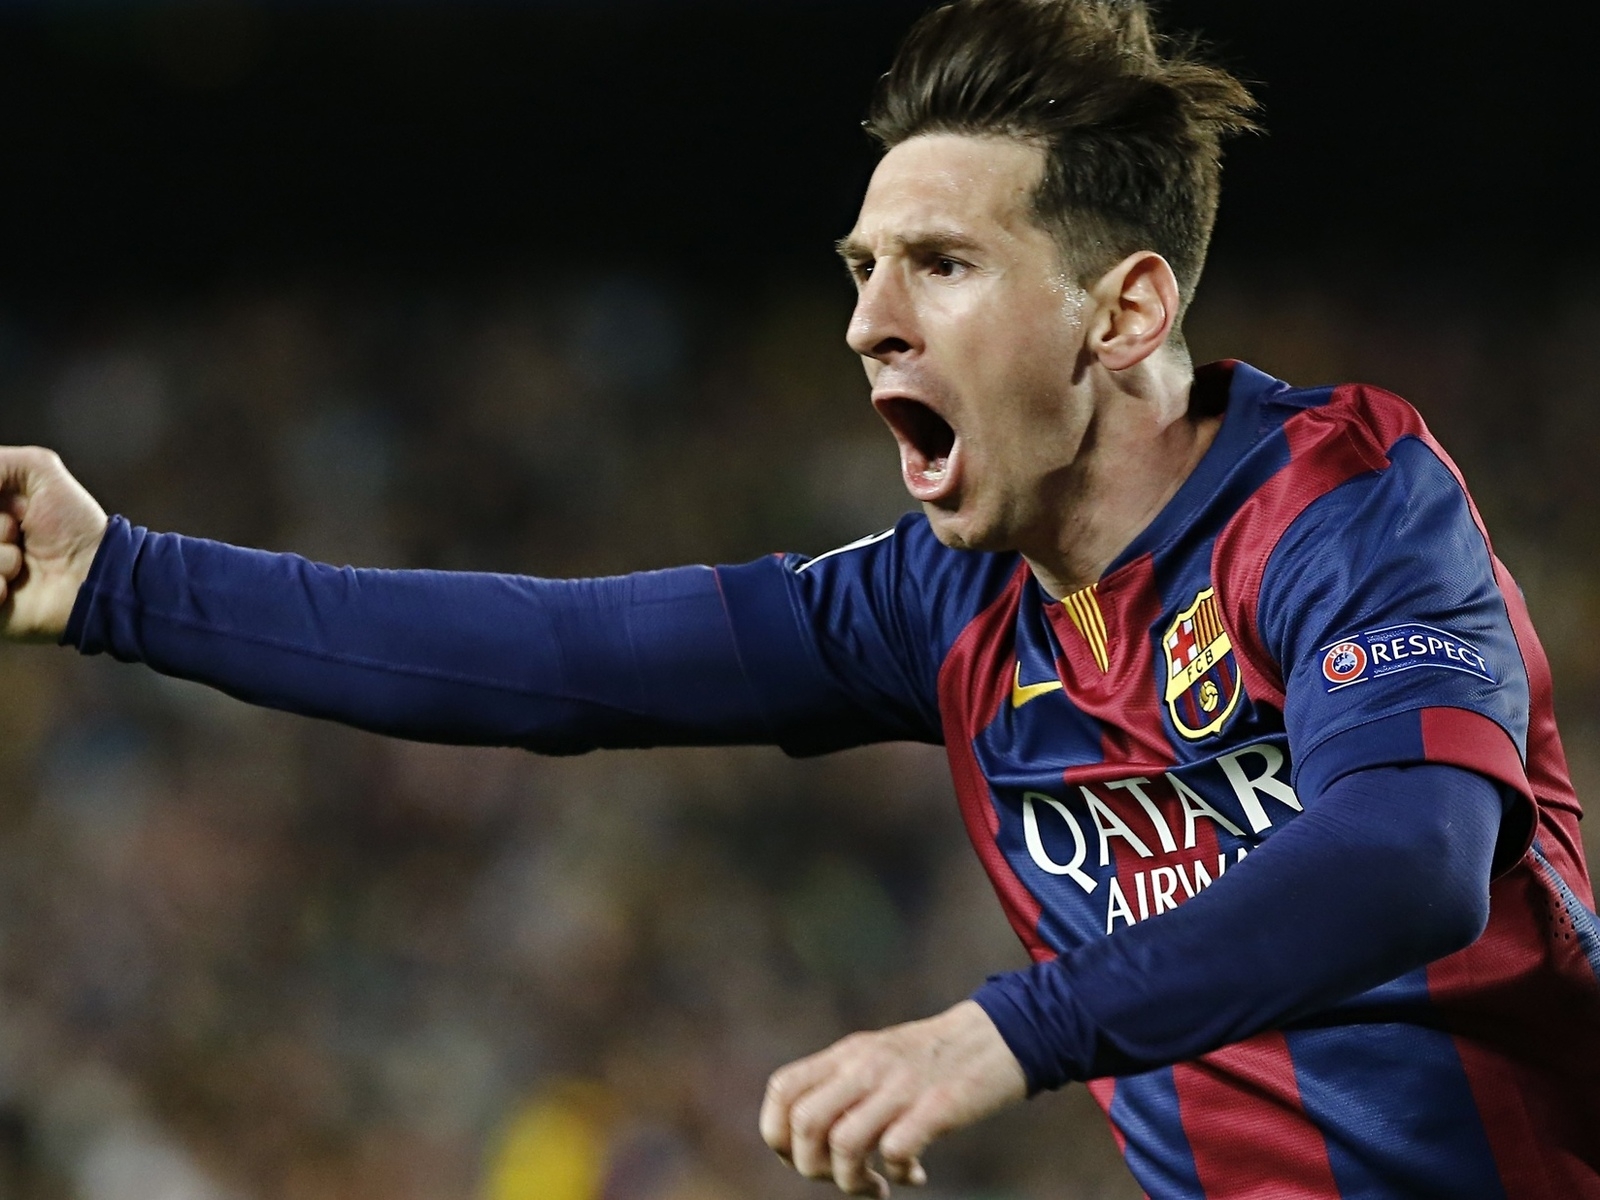 Lionel Messi Celebrating for 1600 x 1200 resolution